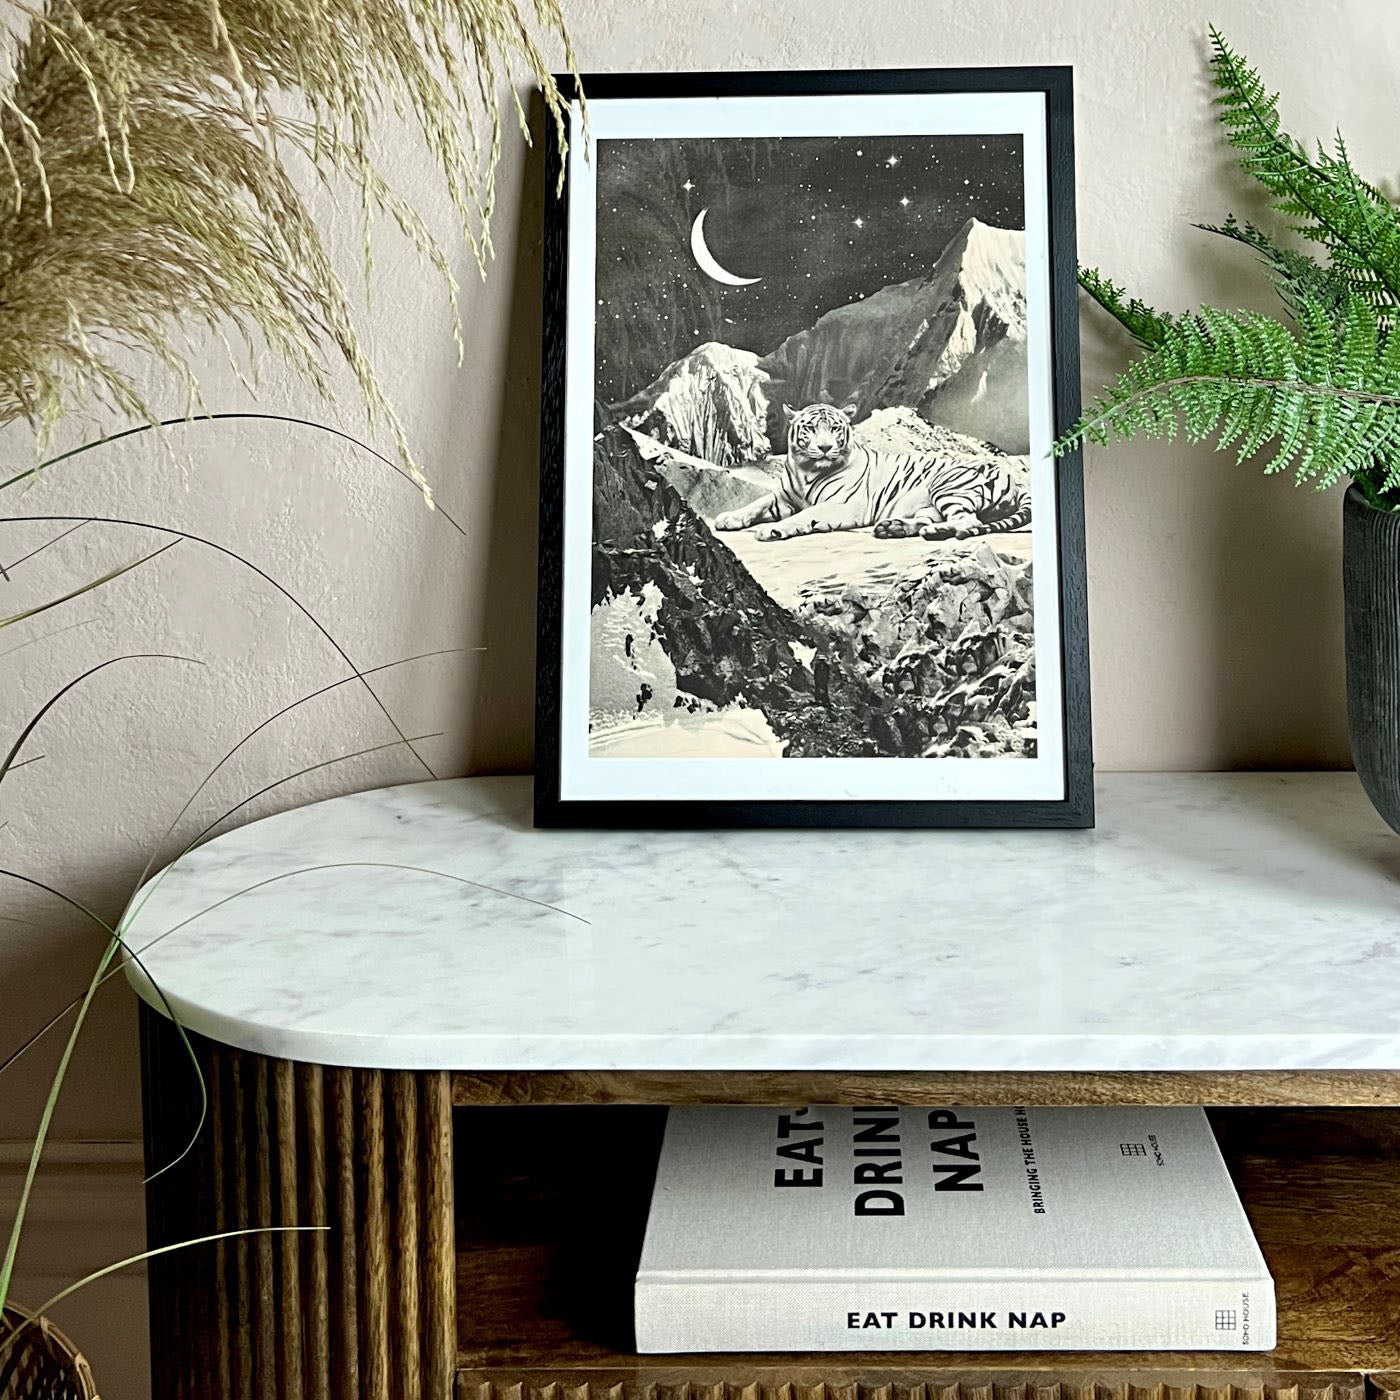 White Moon Tiger - Framed A3 Print